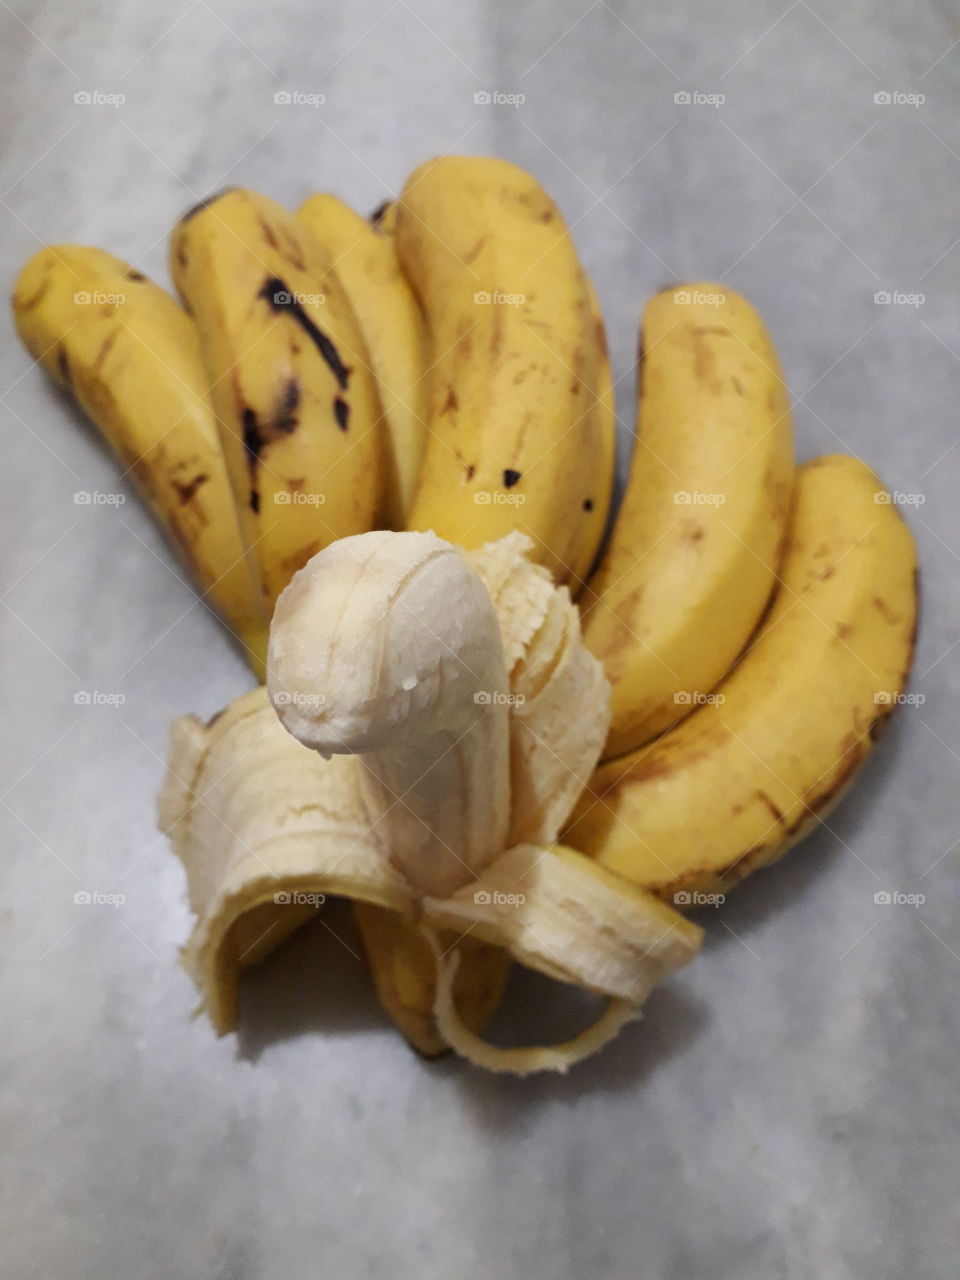 banana
casca  banana